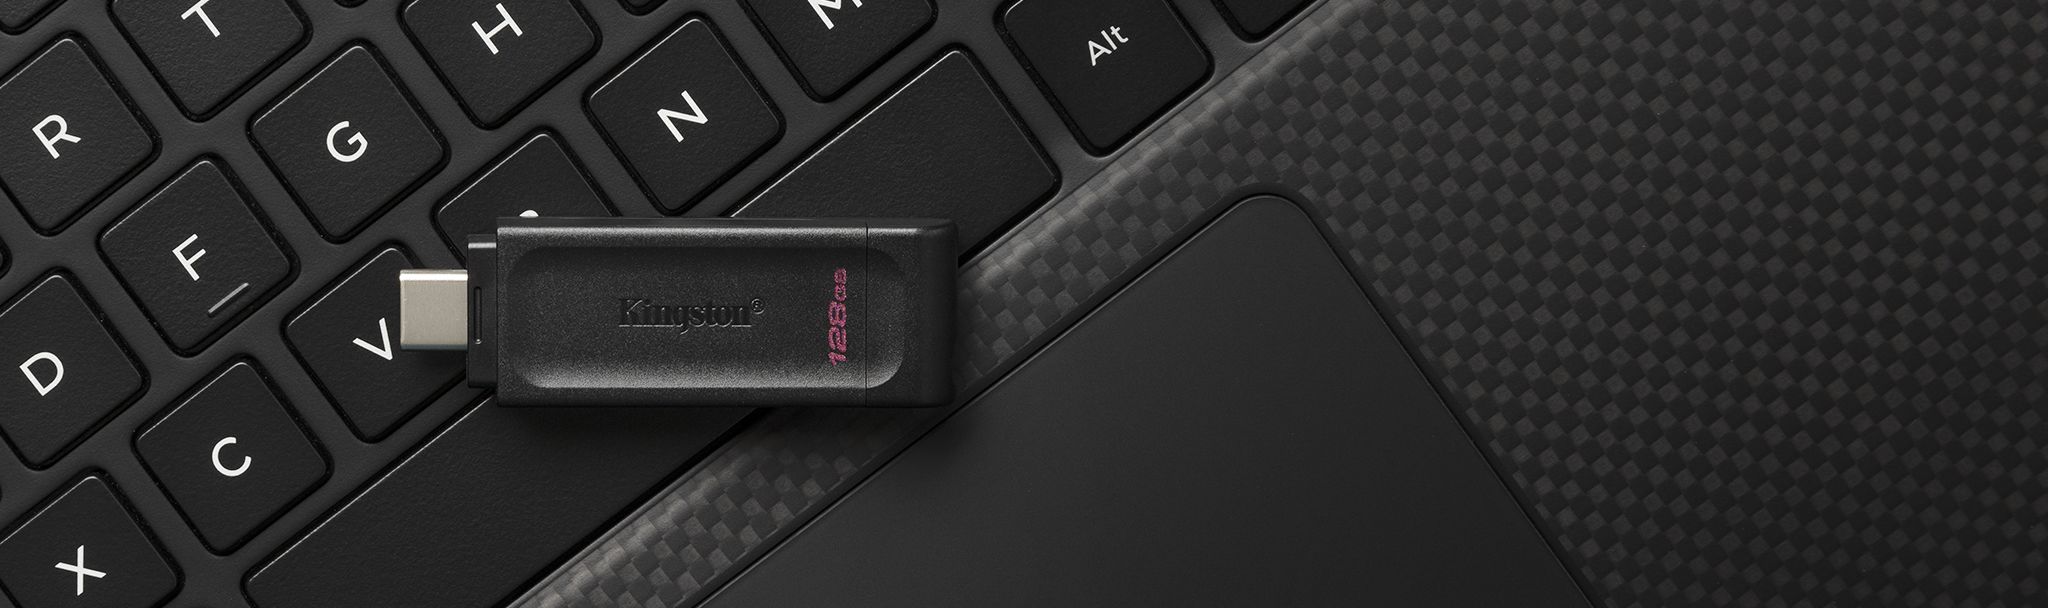 Pednost USB flash disku Kingston DataTraveler 70 je i jeho kompaktn proveden, take jej mete mt neustle pi ruce pipraven k pouit.